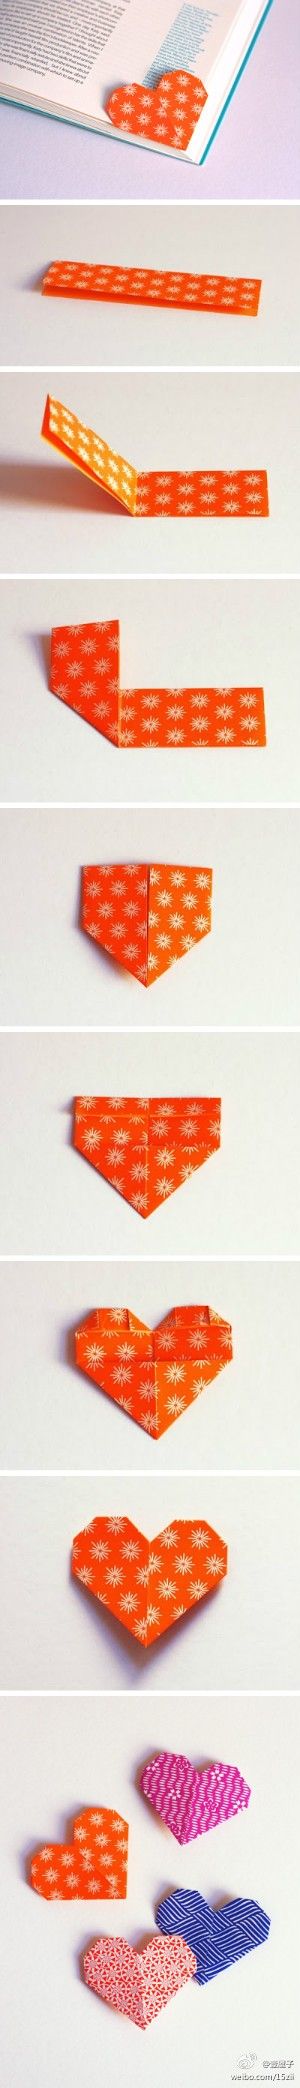 Heart-shaped Bookmark